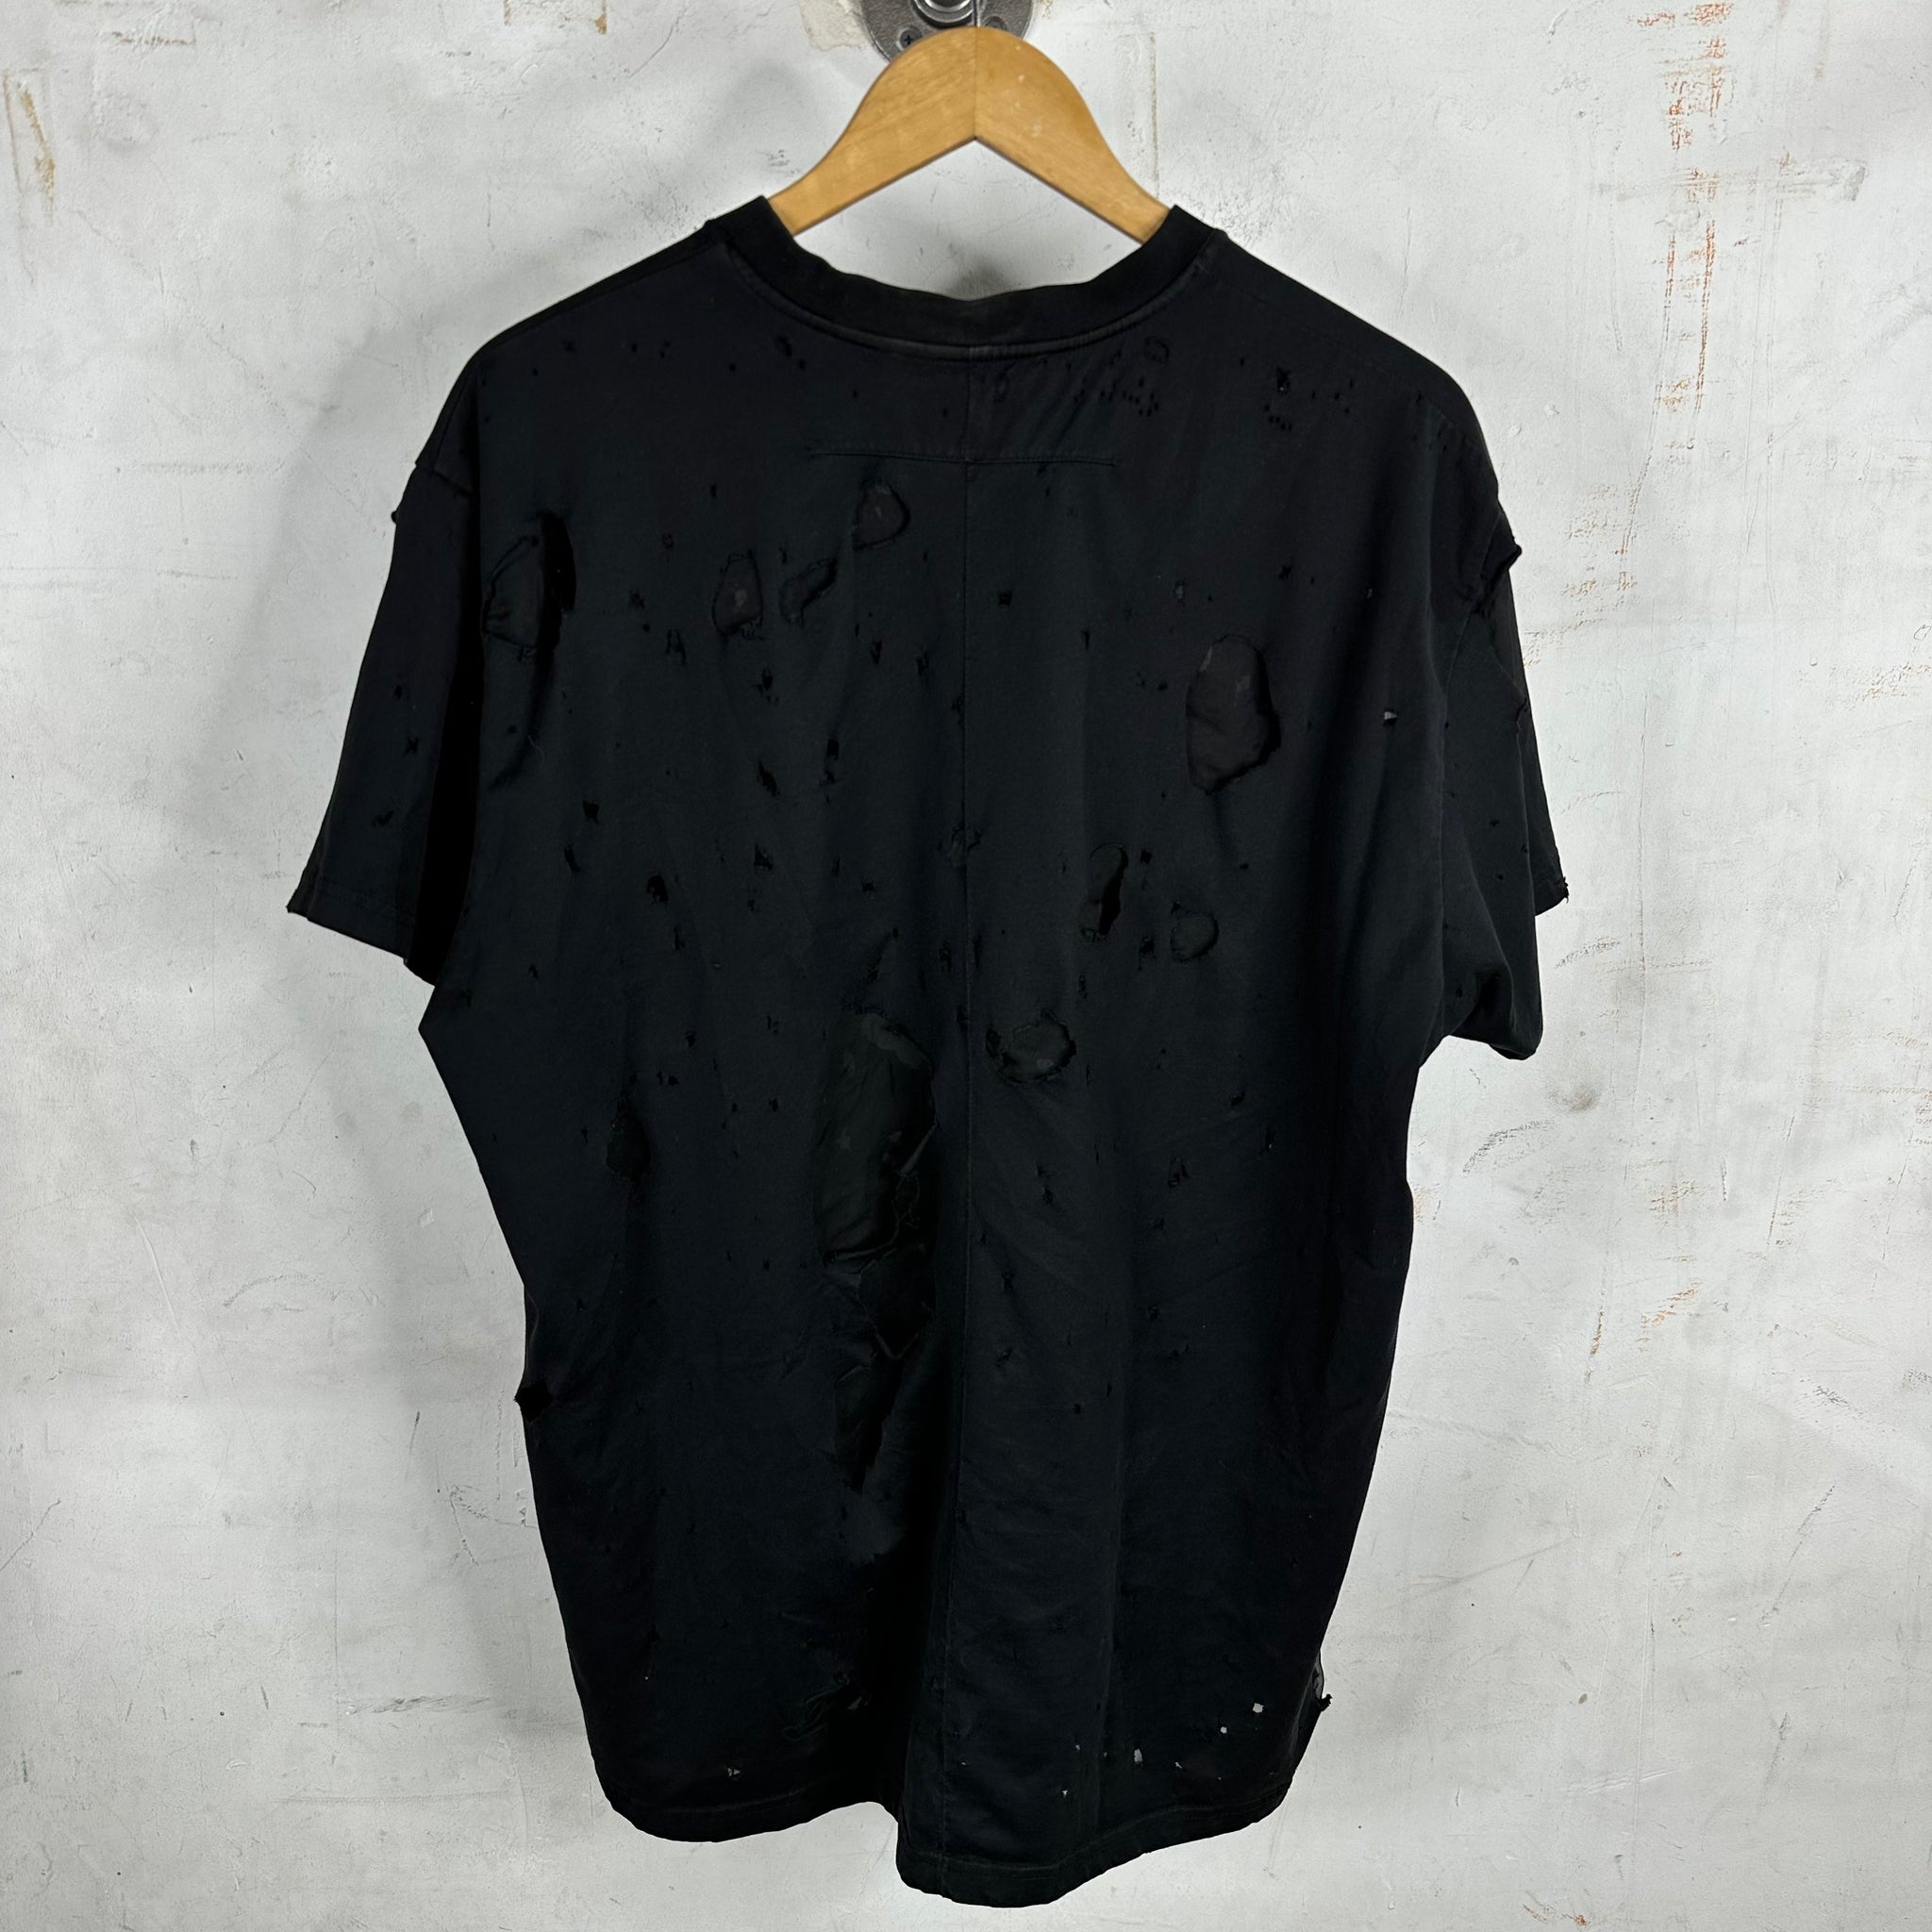 Givenchy Distressed Logo T-Shirt